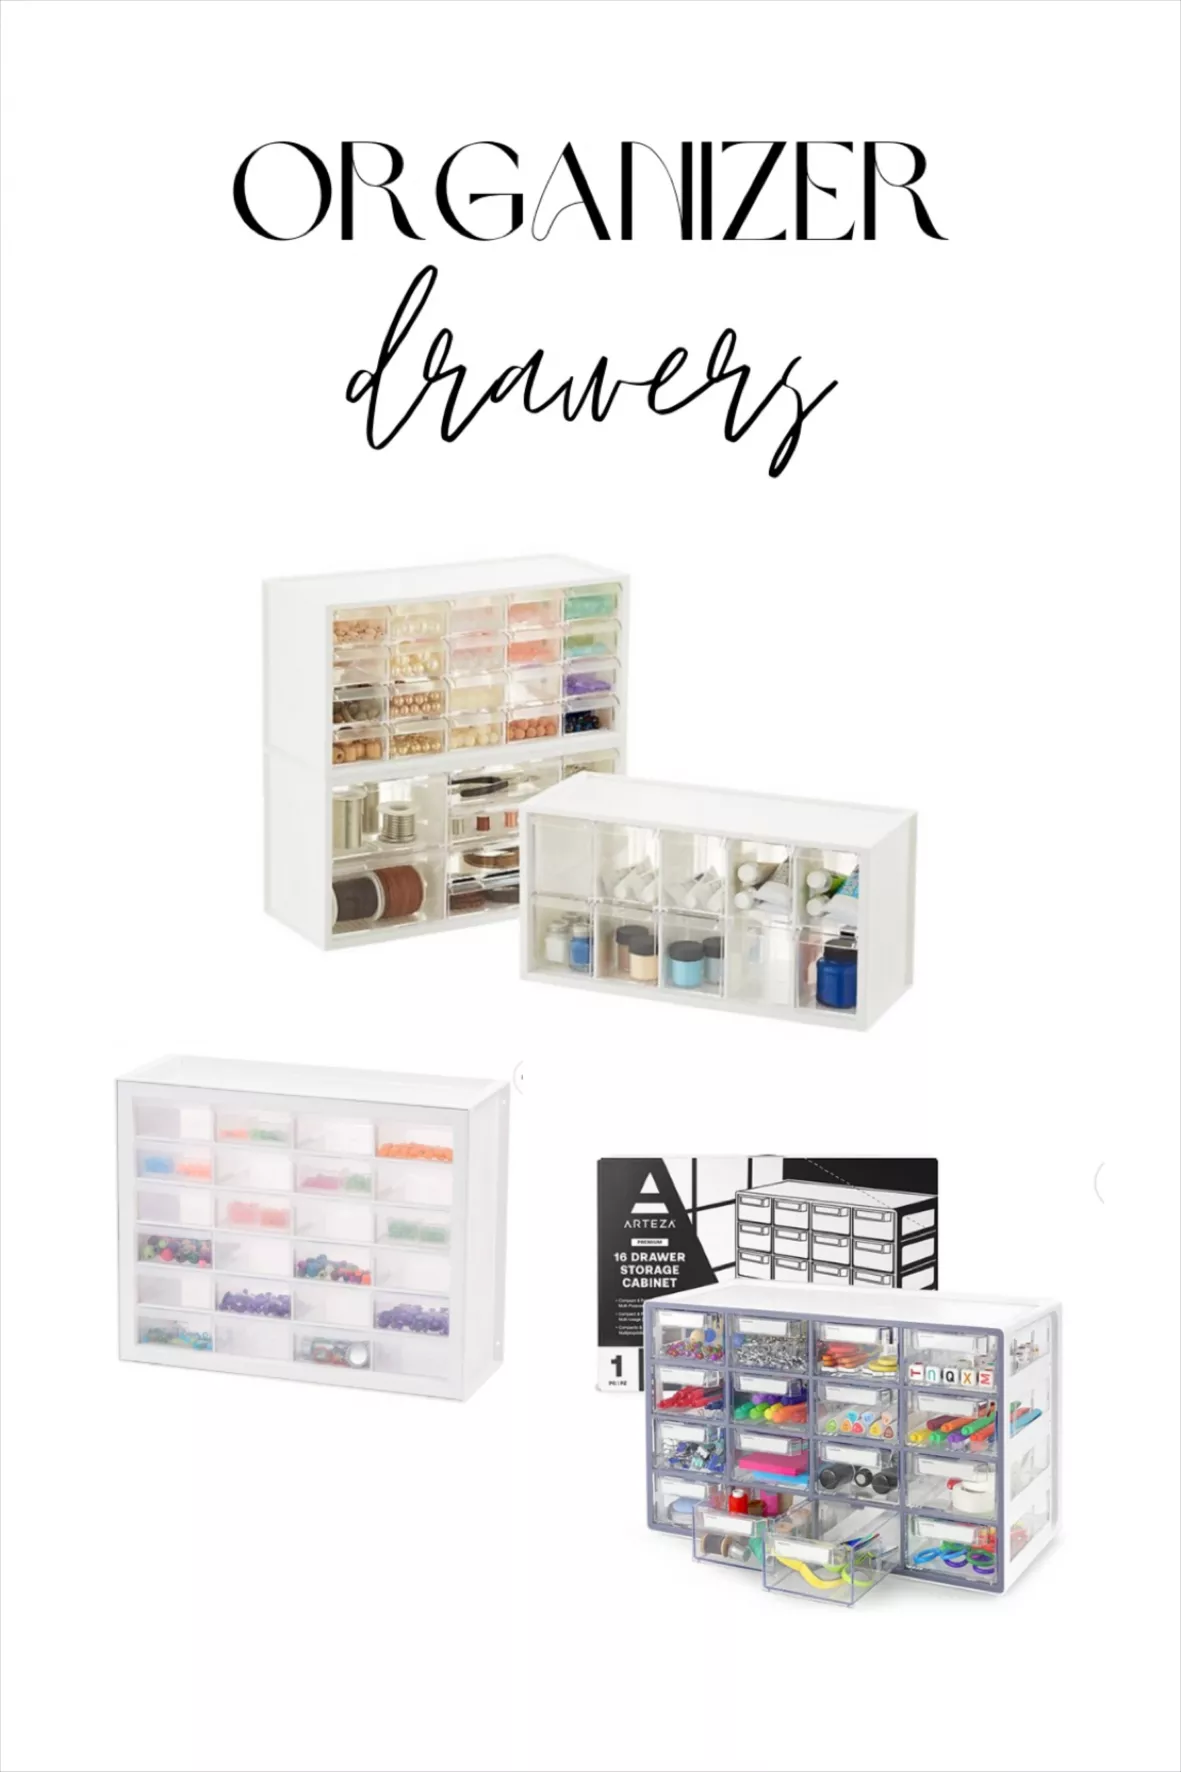 24-Drawer Craft Cabinet